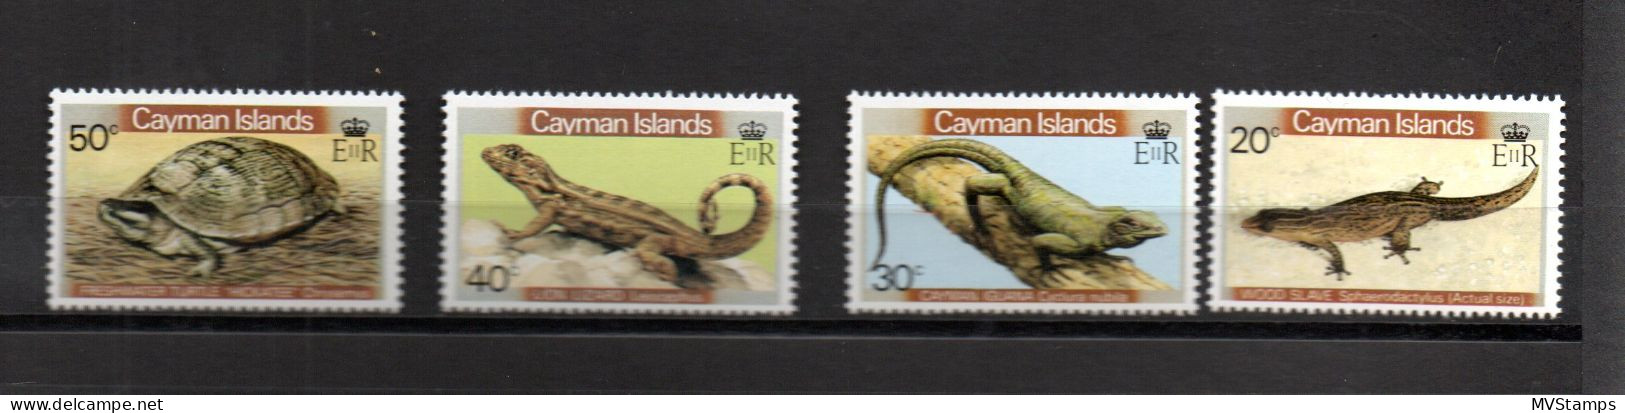 Cayman Islands 1981 Old Set Turtle/lizard Stamps (Michel 471/74) Nice MNH - Caimán (Islas)